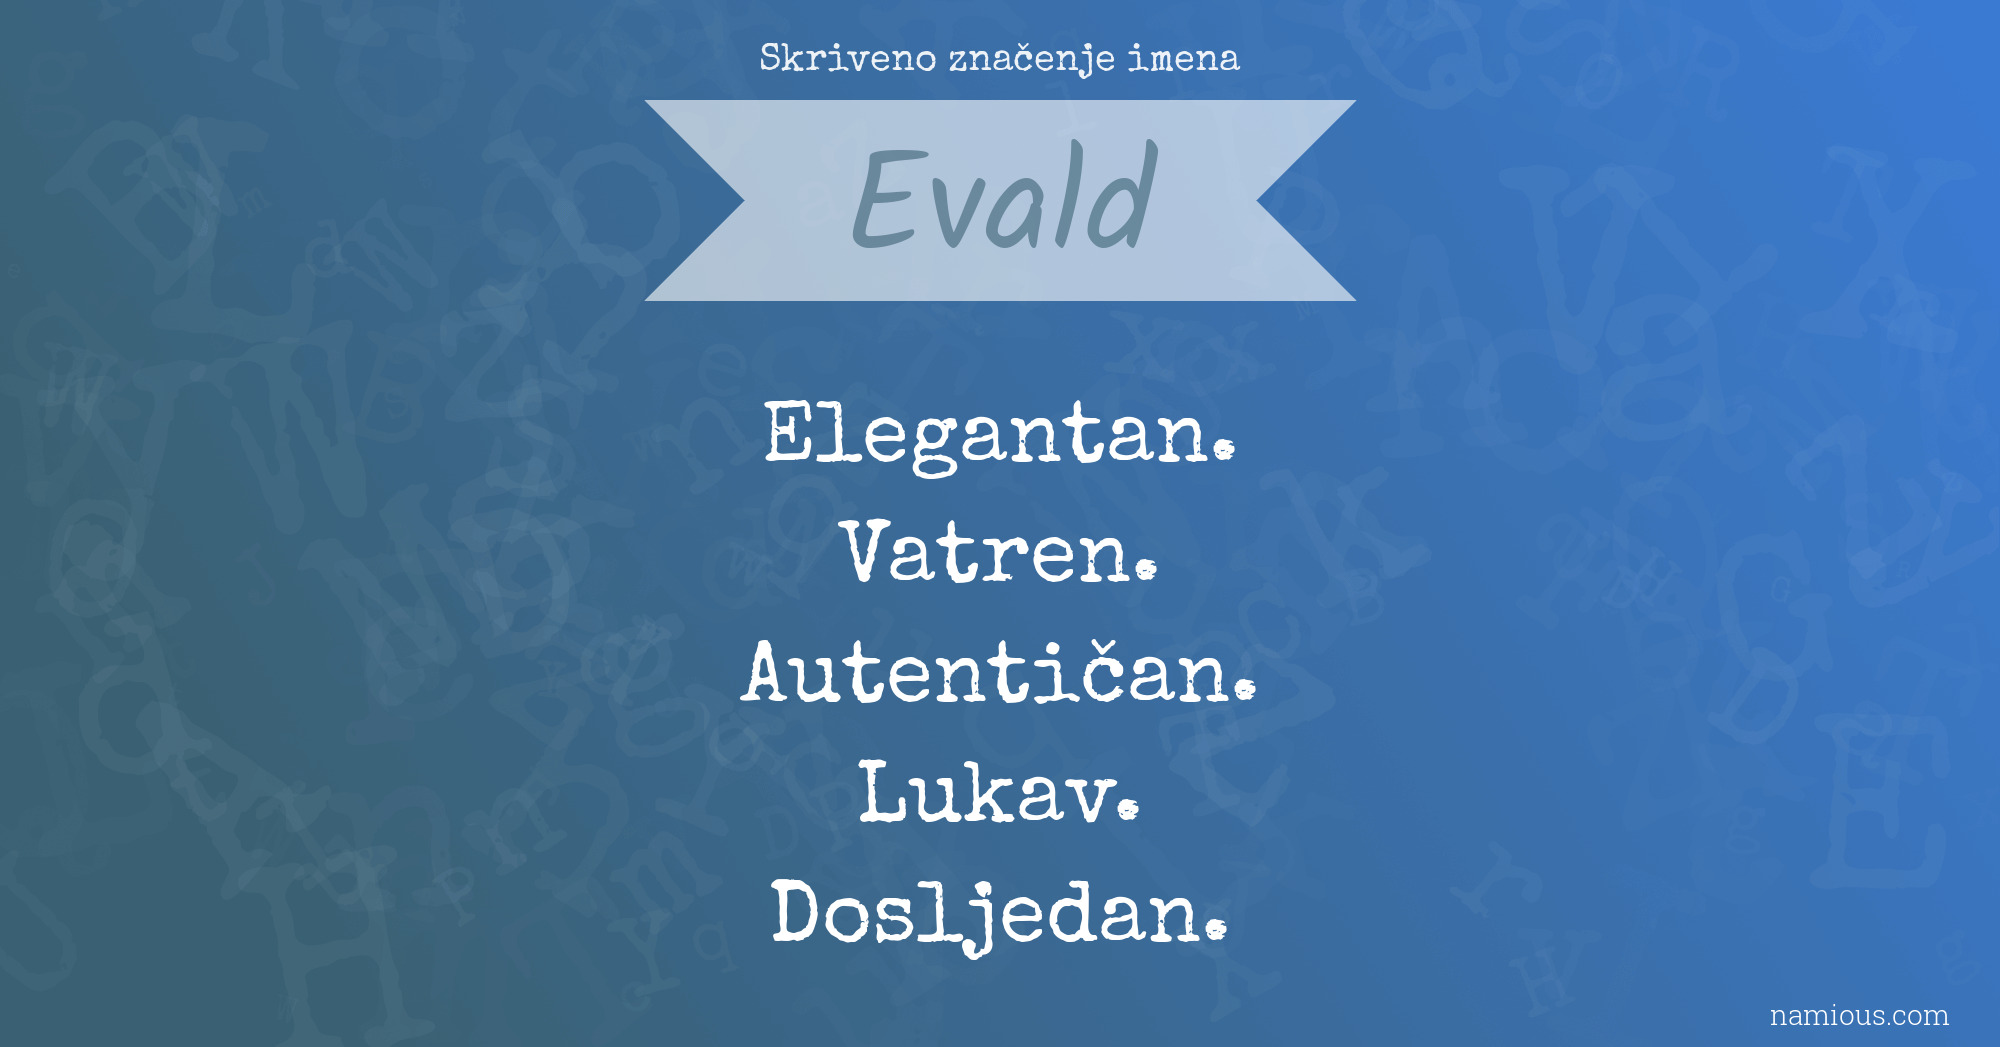 Skriveno značenje imena Evald